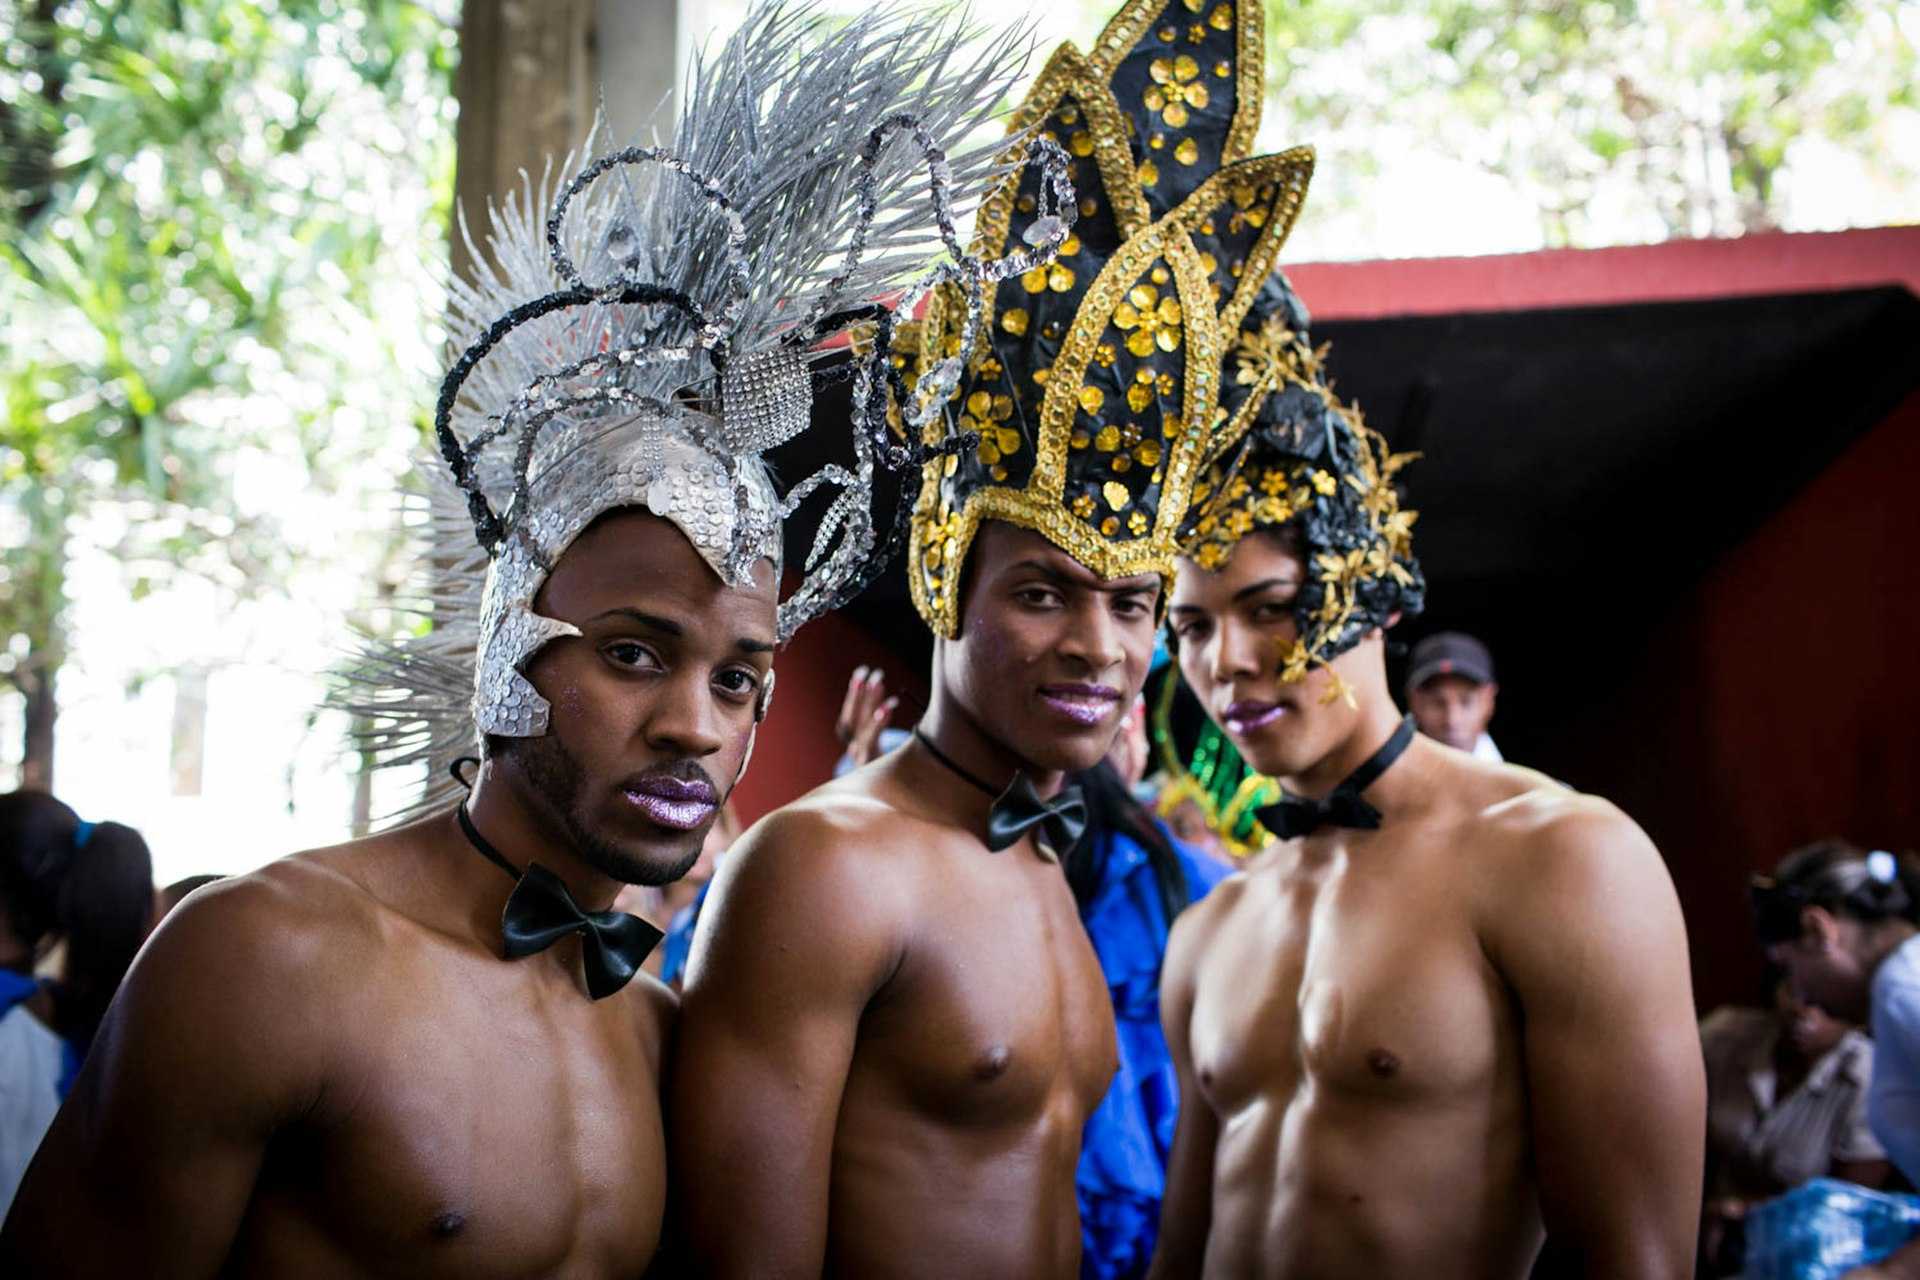 The photographer capturing Havana's LGBT scene